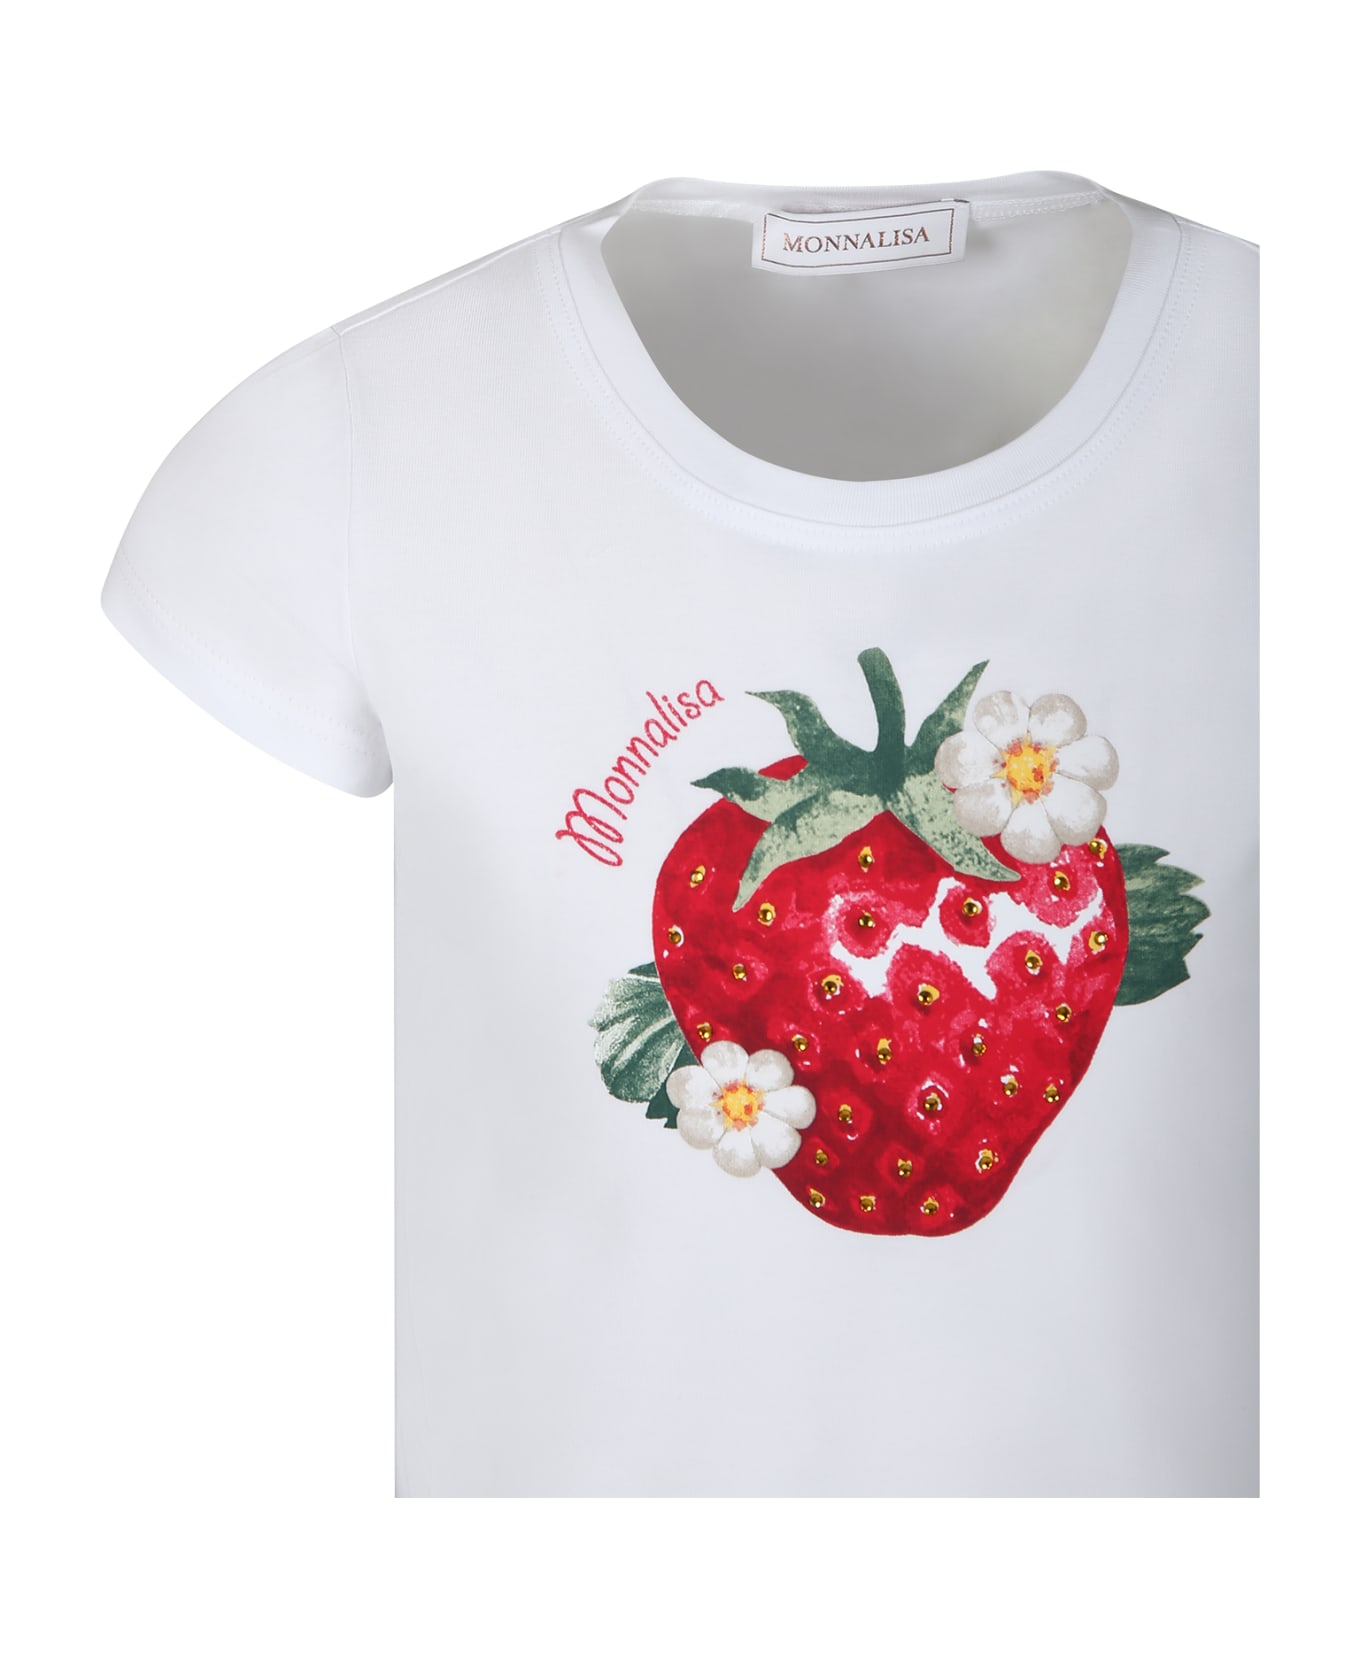 Monnalisa White T-shirt For Girl With Strawberry Print - White